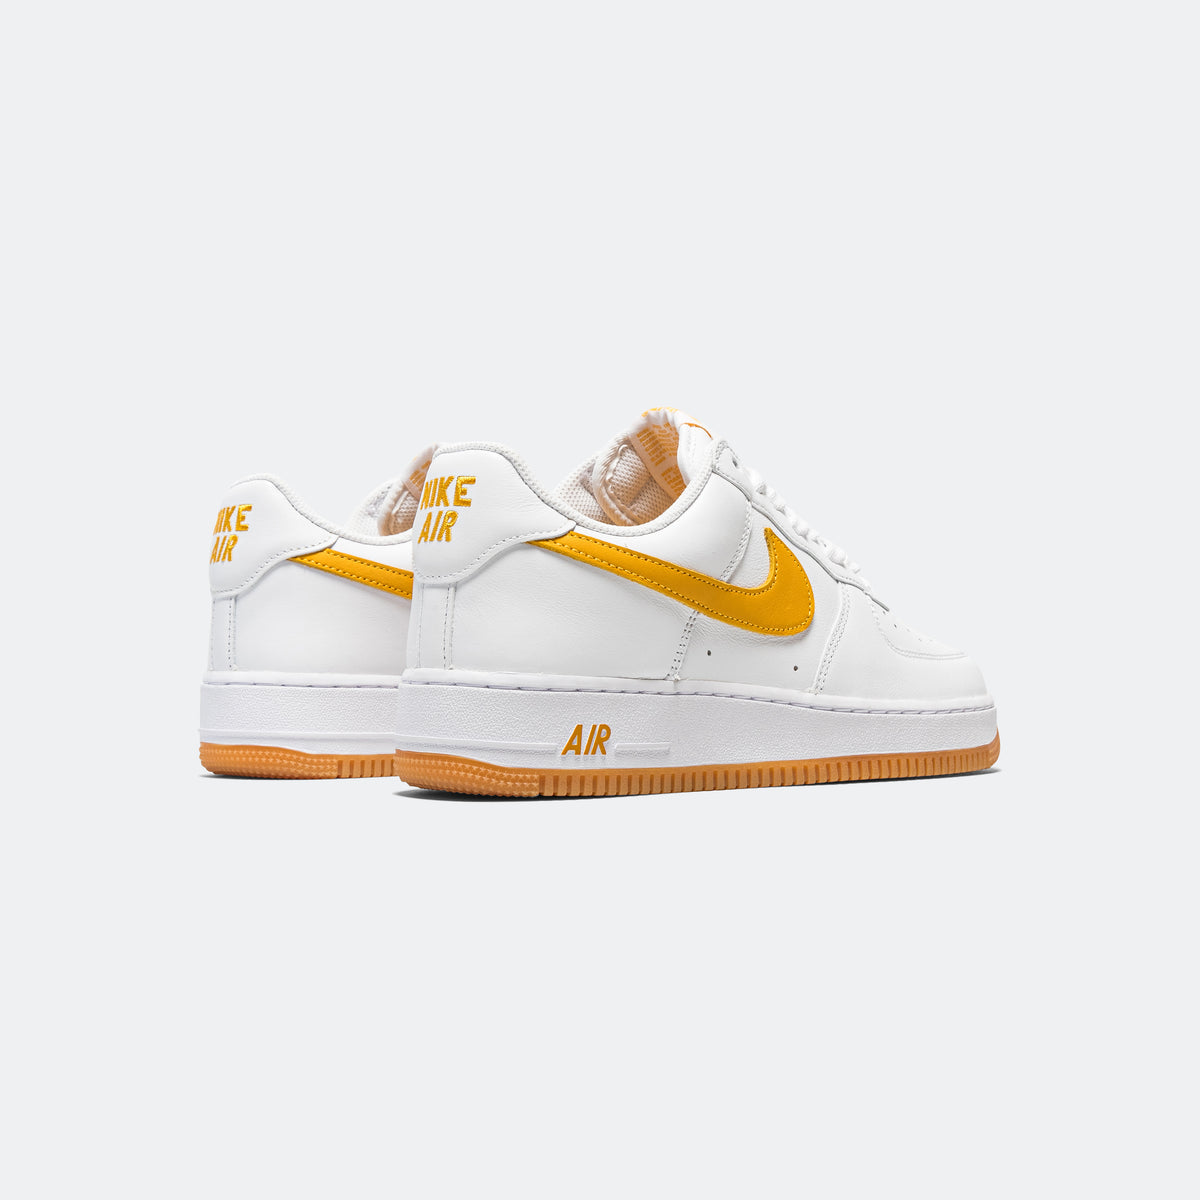 Nike Air Force 1 Low â€œTaxiâ€ Basketball Shoe Black/University Gold-White  (11) 